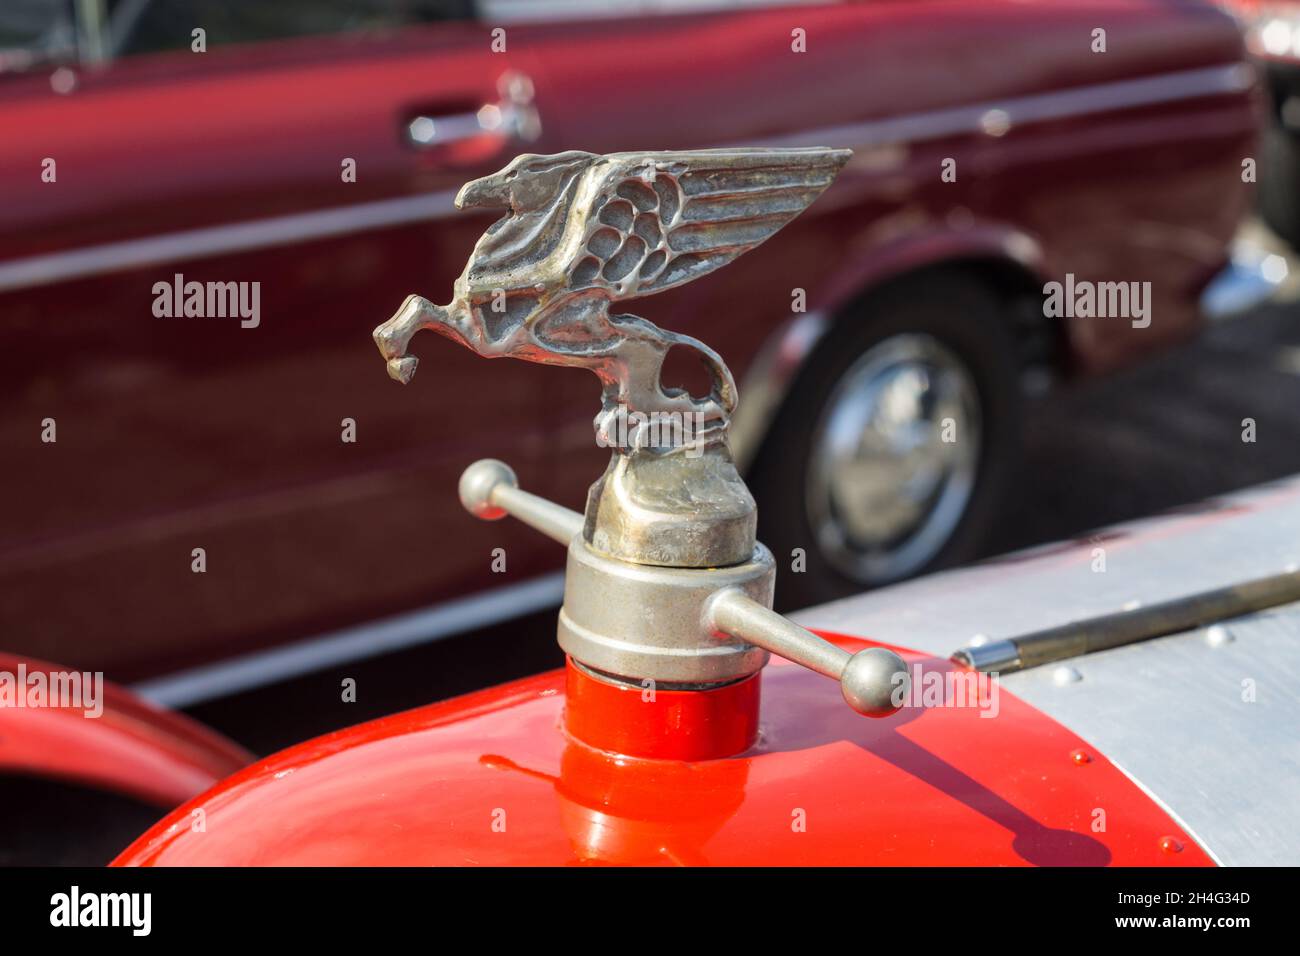 Close up detail of the hood bonnet ornament sculpture on a 1927 red Amilcar C6 Voiturette classic vintage sports racing car Stock Photo